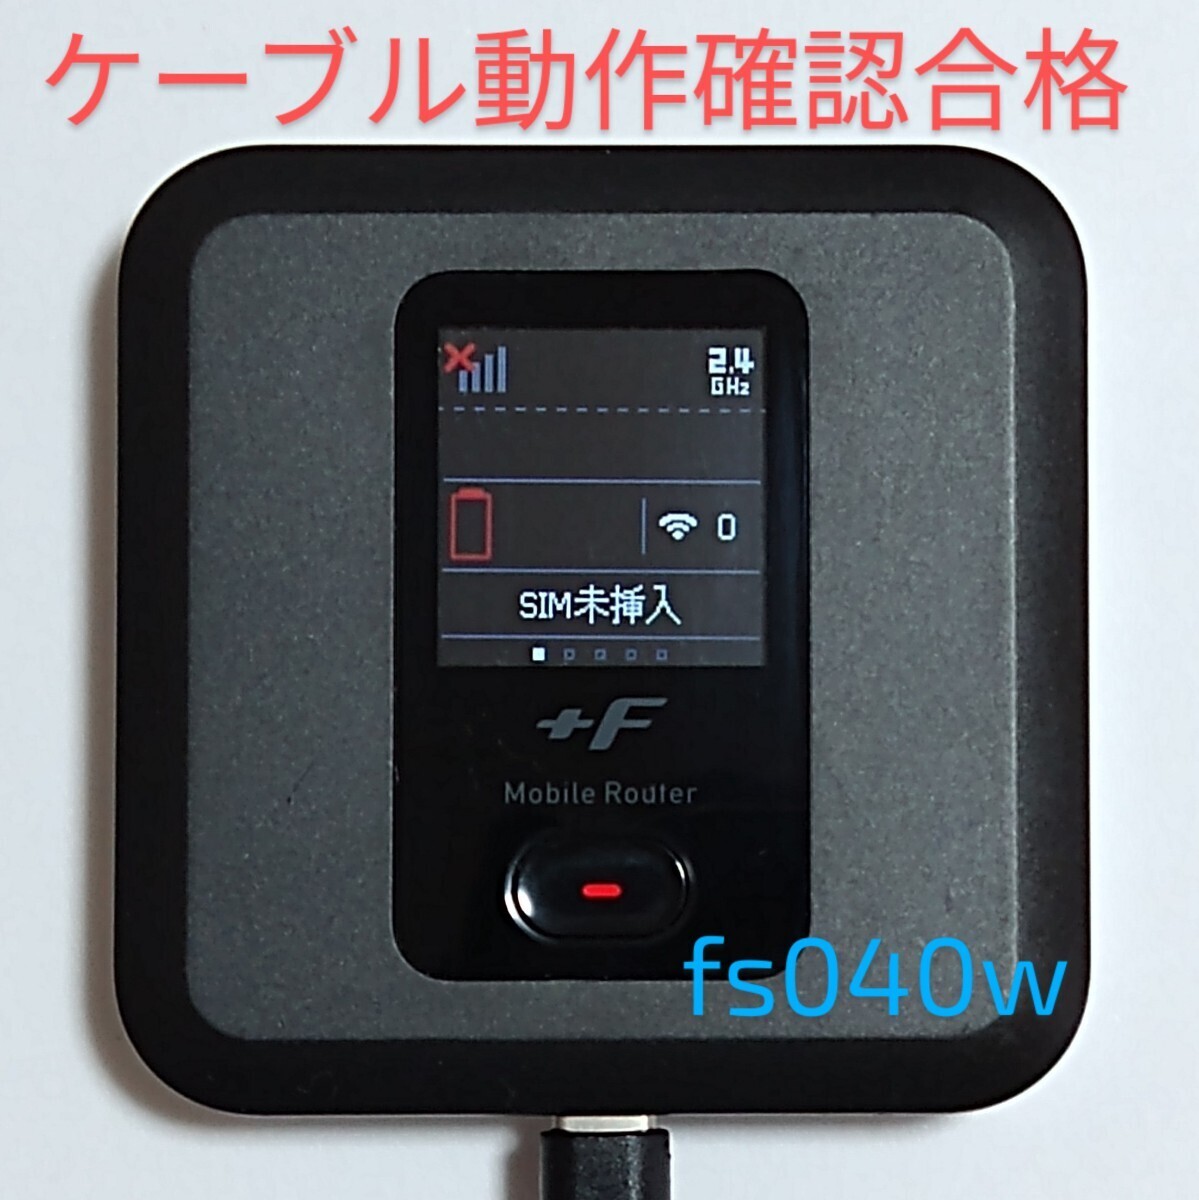 ZA1 富士ソフト +F FS040W モバイル Wi-Fi ルーター SIMフリーの画像2